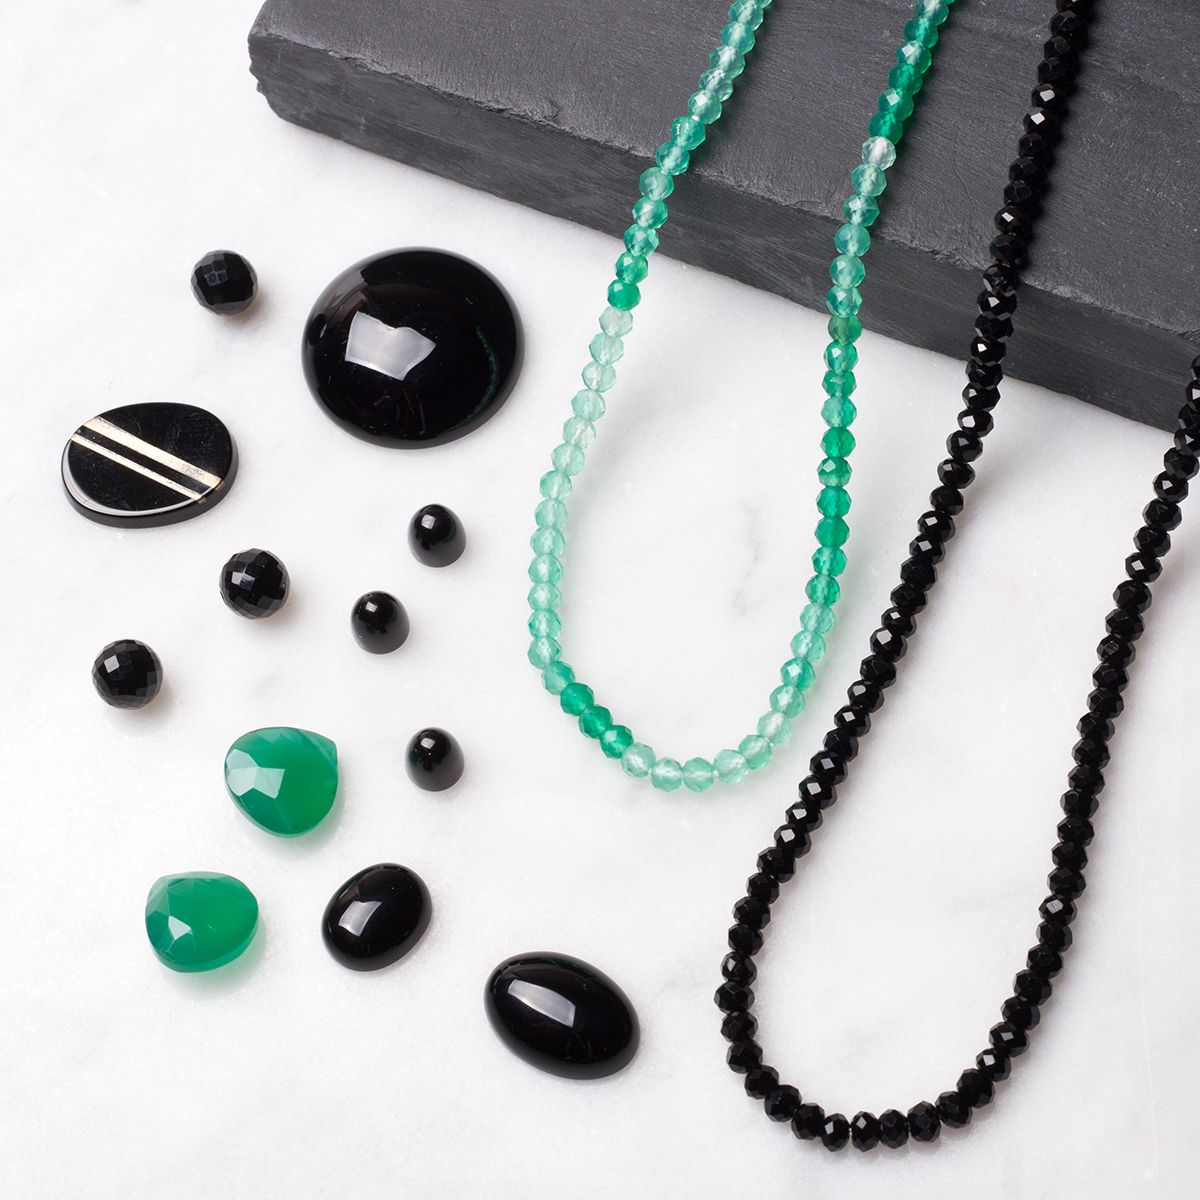 Buy Precious Black Diamond Beads Gemstone for Jewelry Making